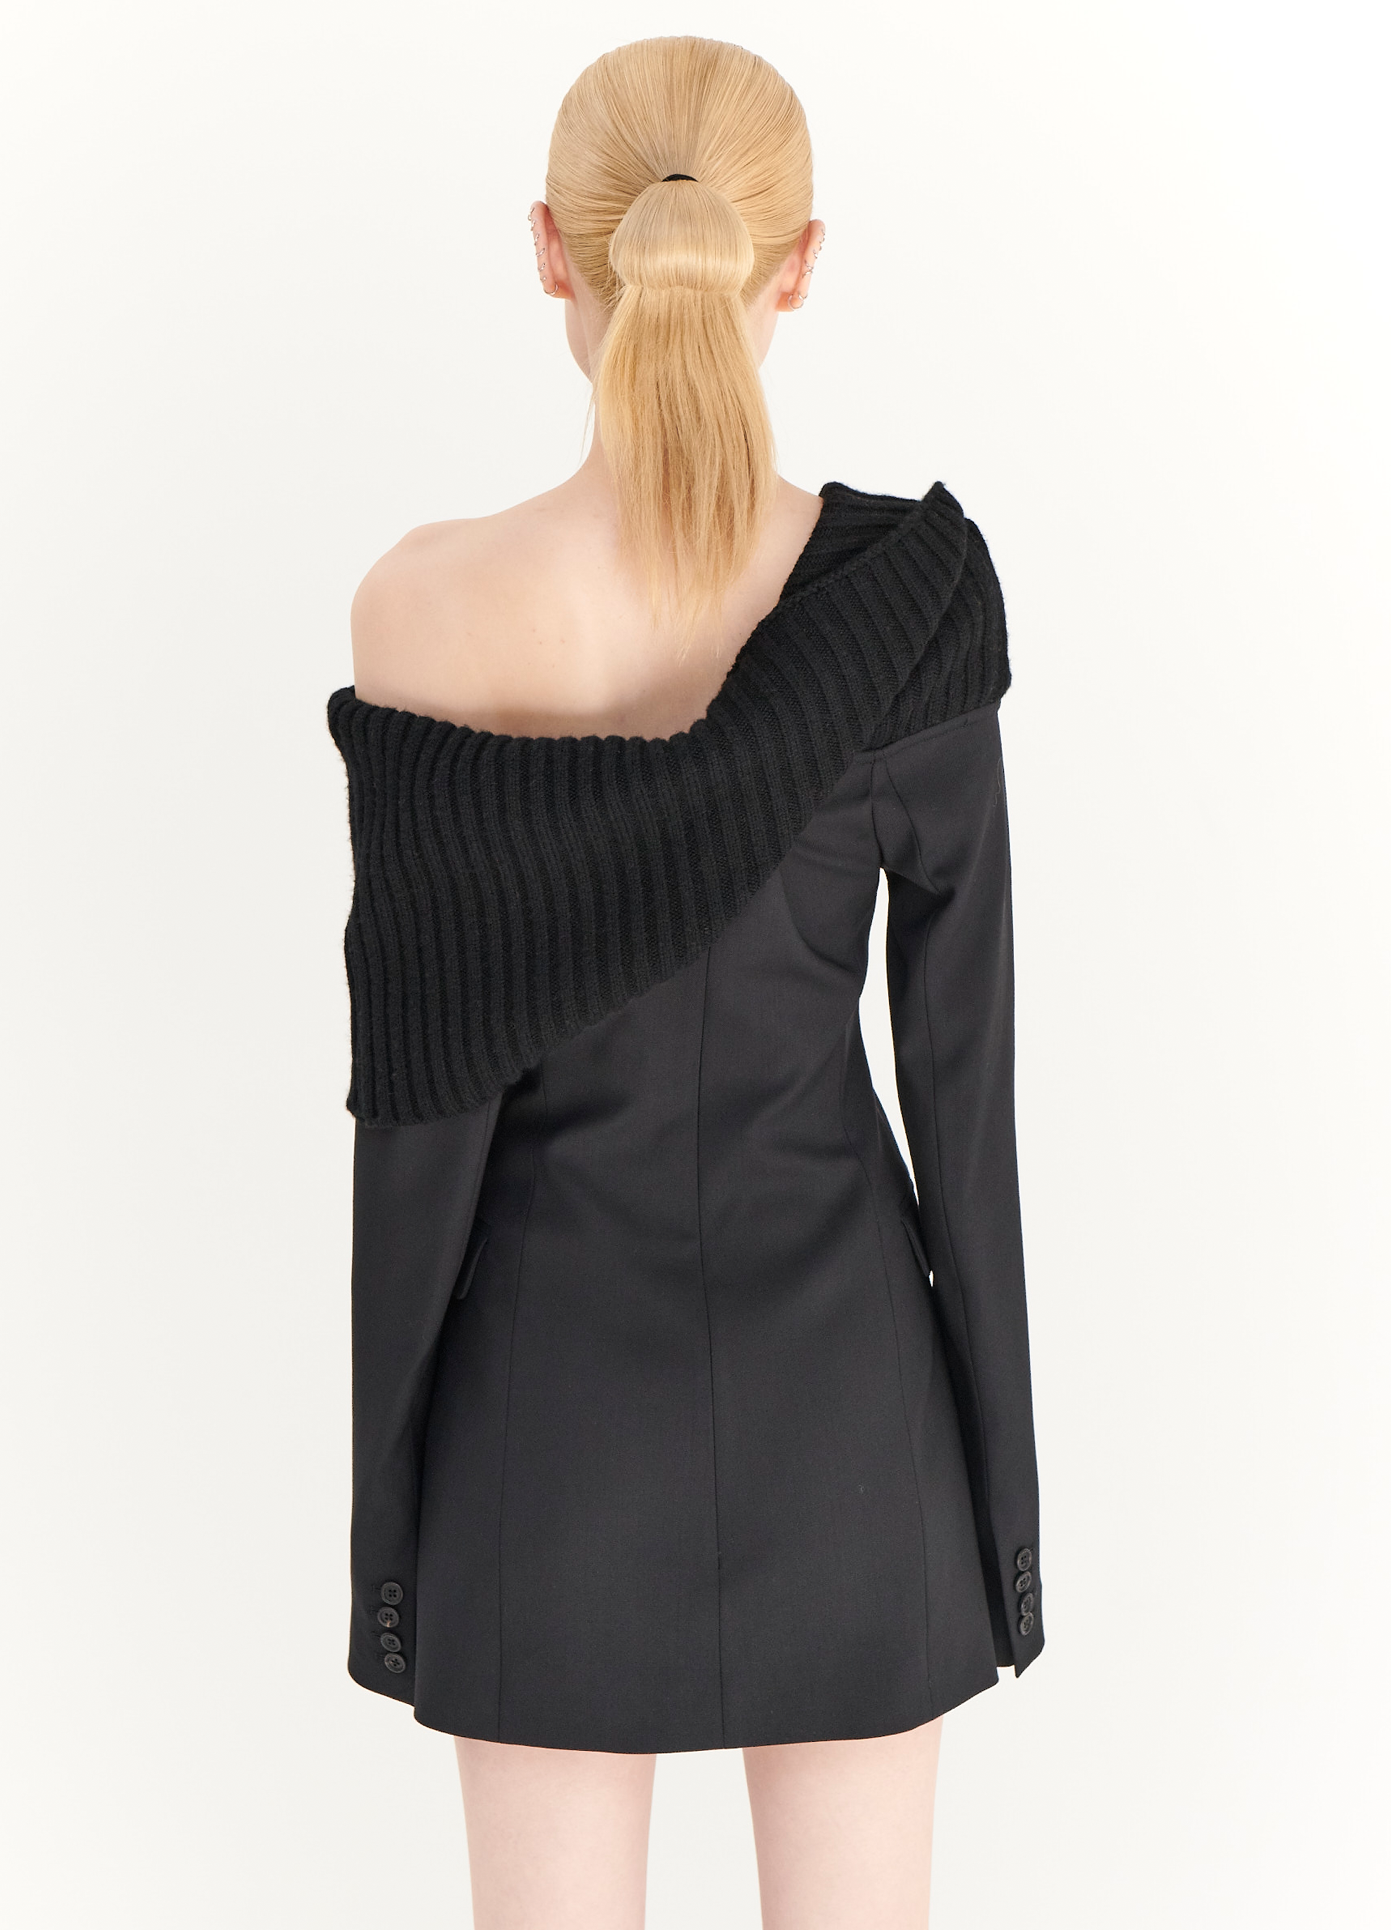 MONSE Off the Shoulder Knit Collar Dress in Black on model back view